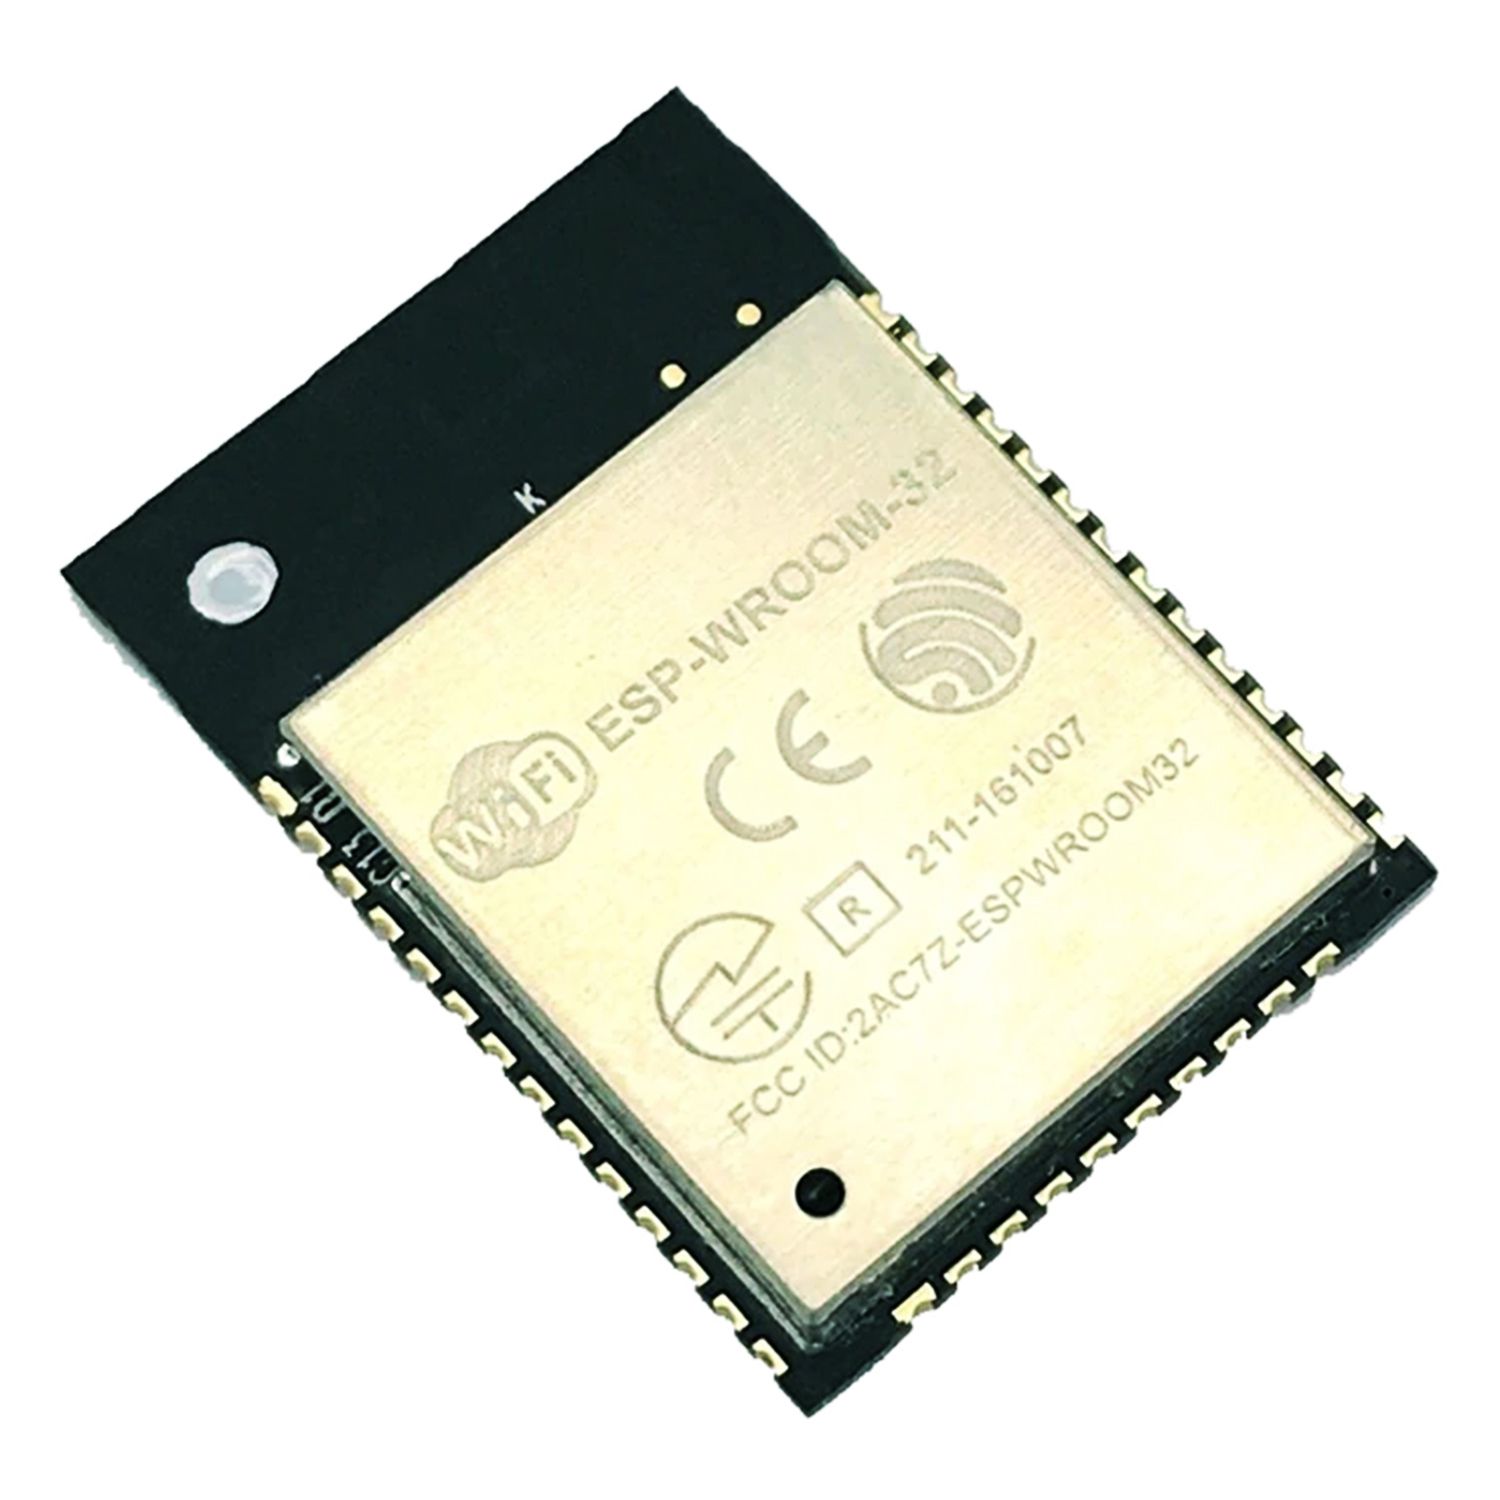 Сетевая плата ESP-WROOM-32 Wi-Fi модуль с Bluetooth